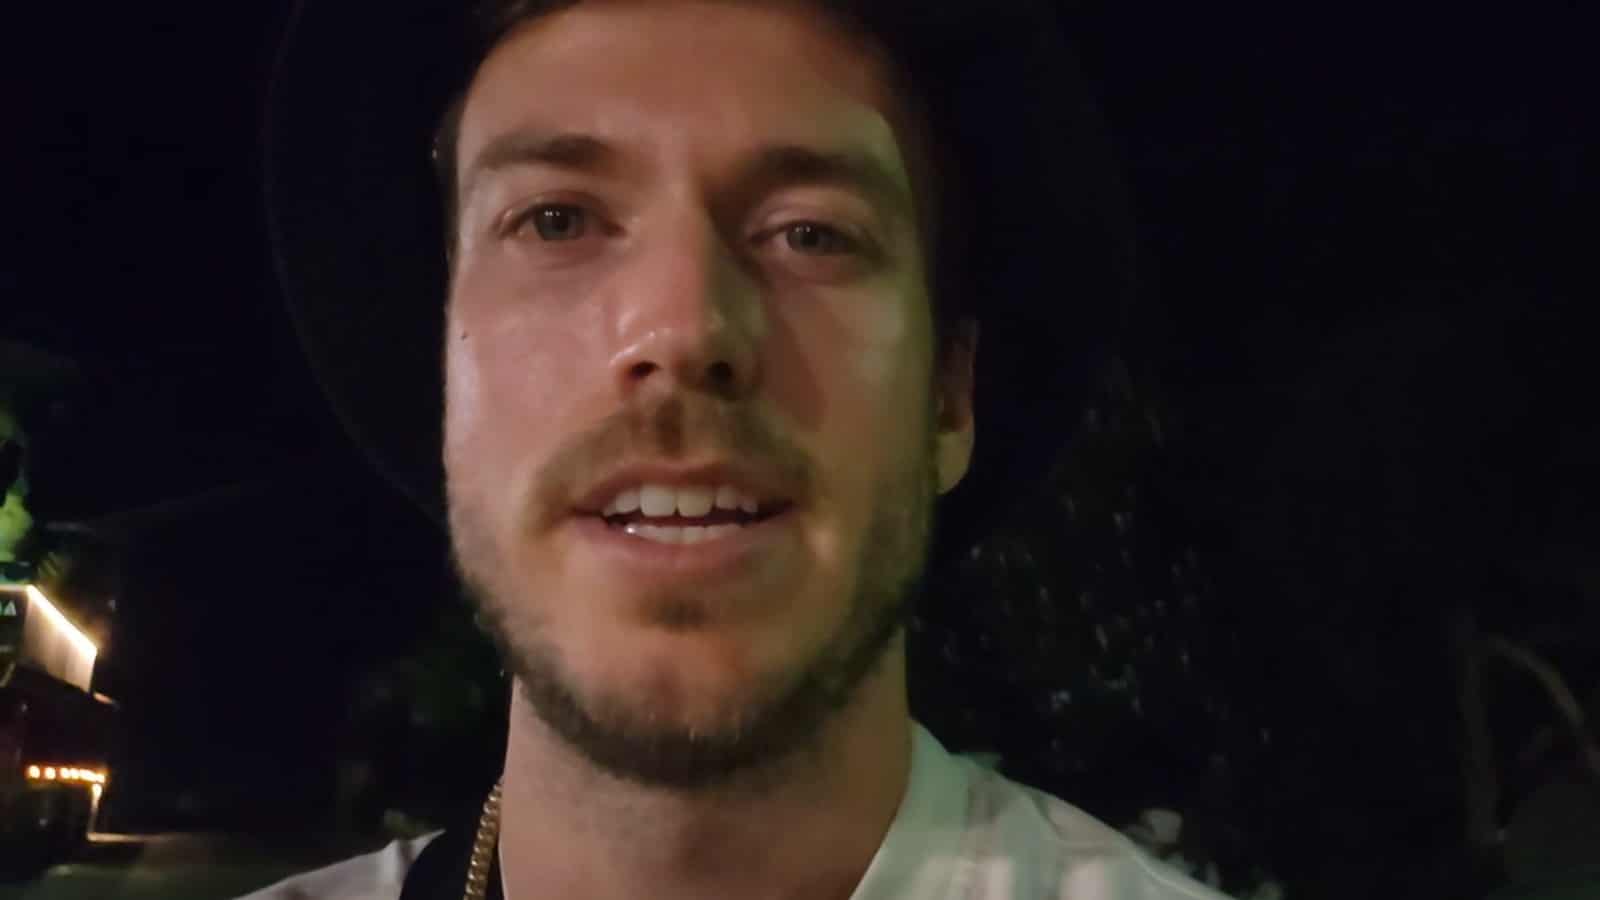 IRL Twitch streamer JakeNBake talks to the camera after scary gunshot prank